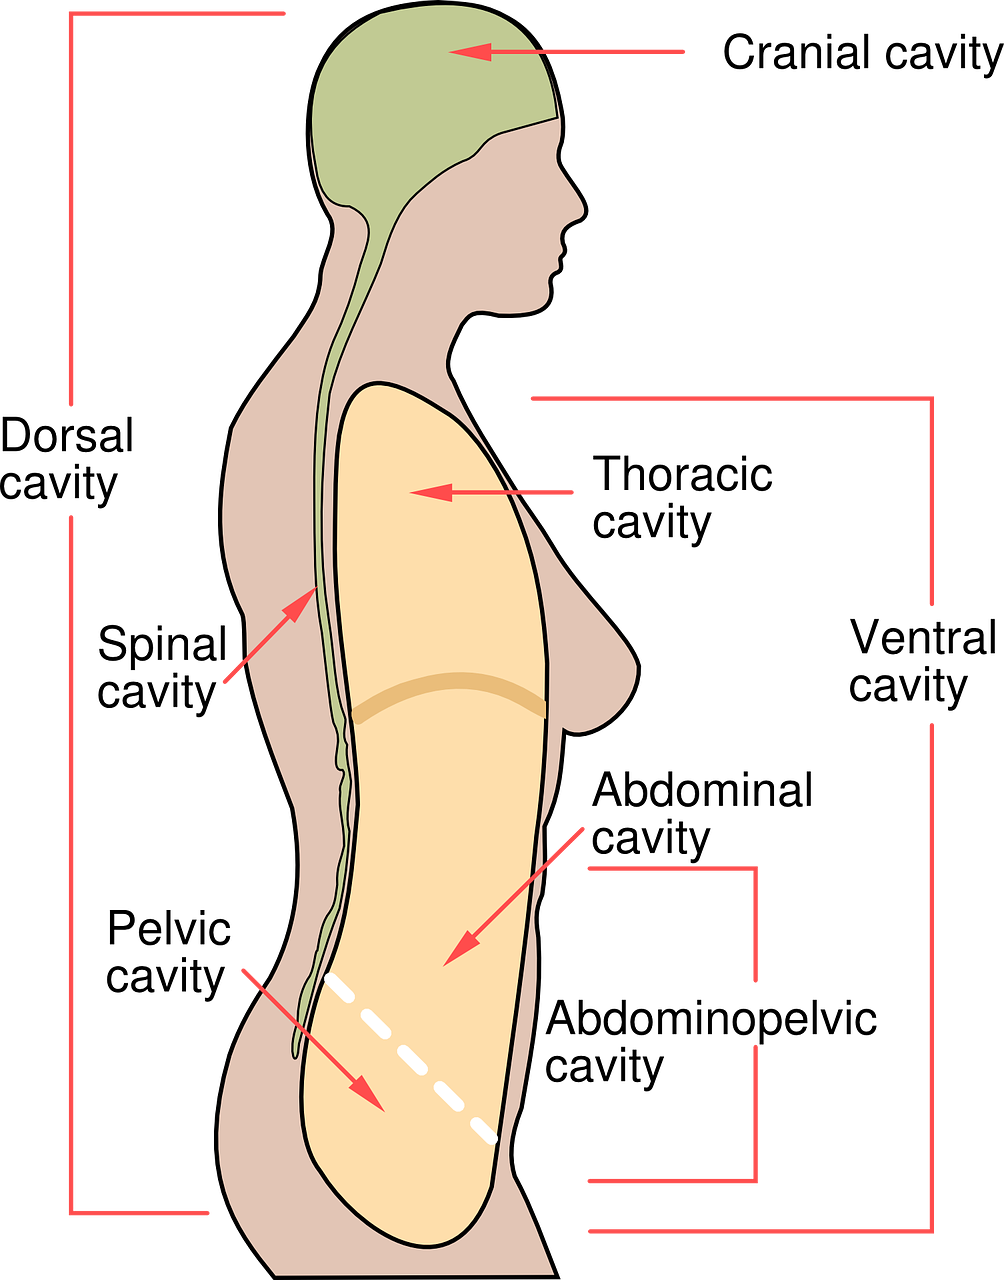 Human Body Cavities Diagram